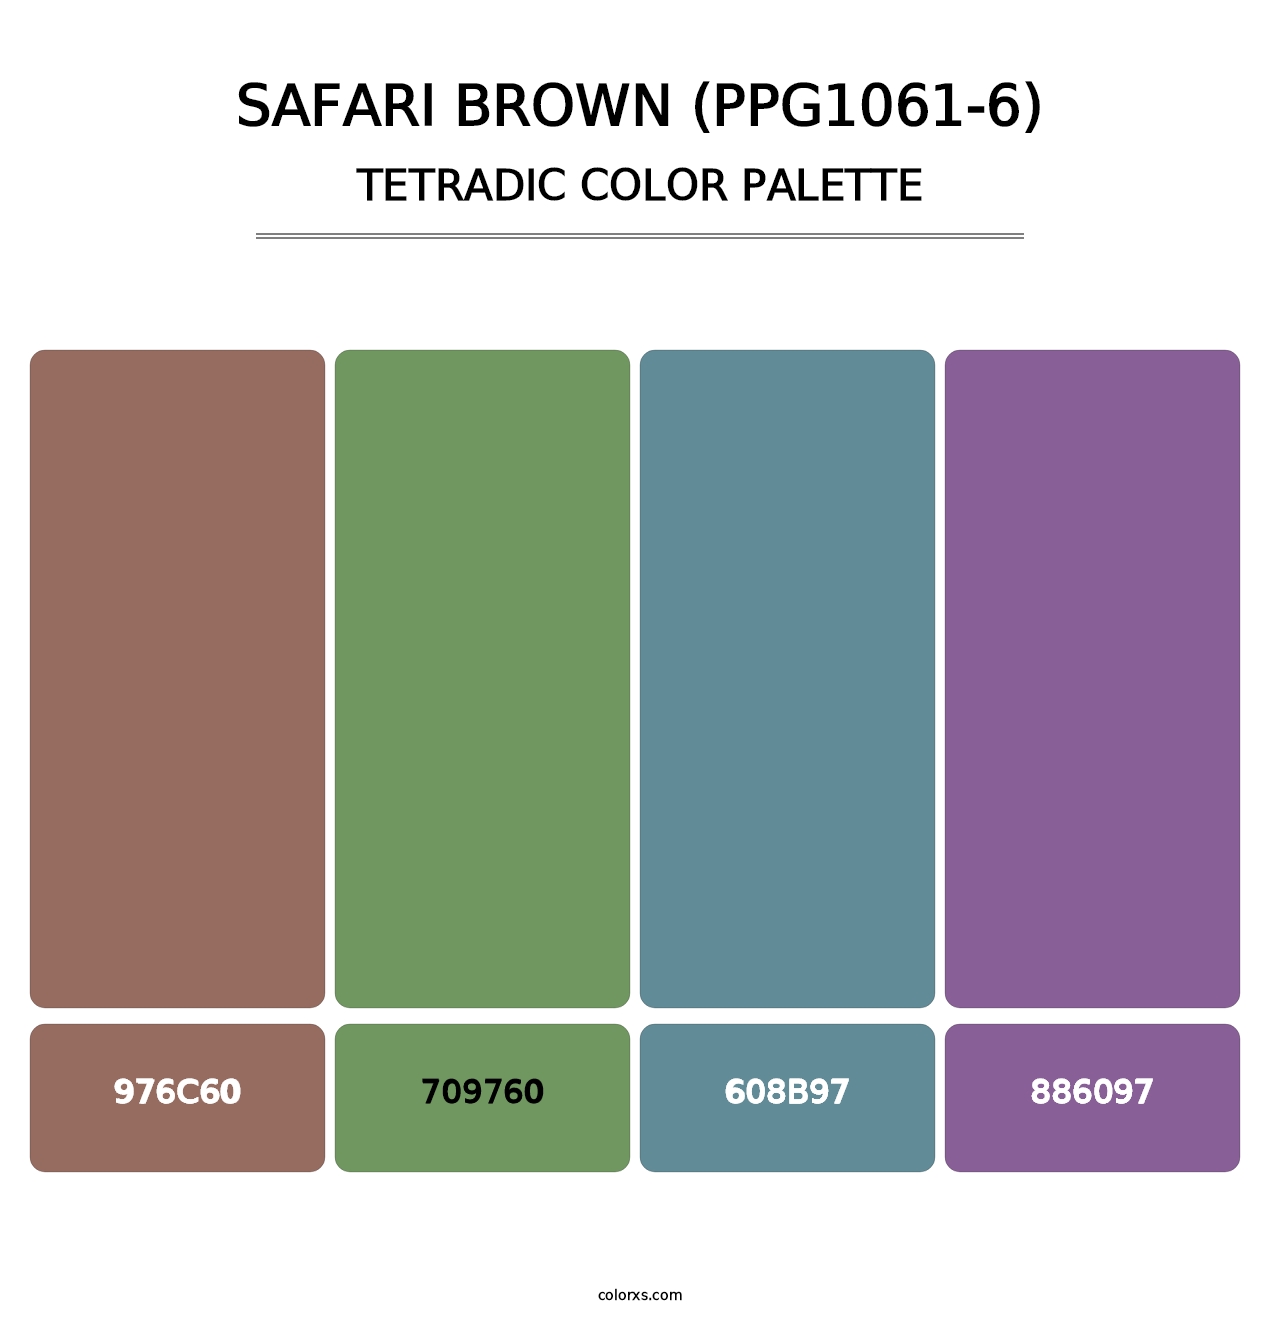 Safari Brown (PPG1061-6) - Tetradic Color Palette